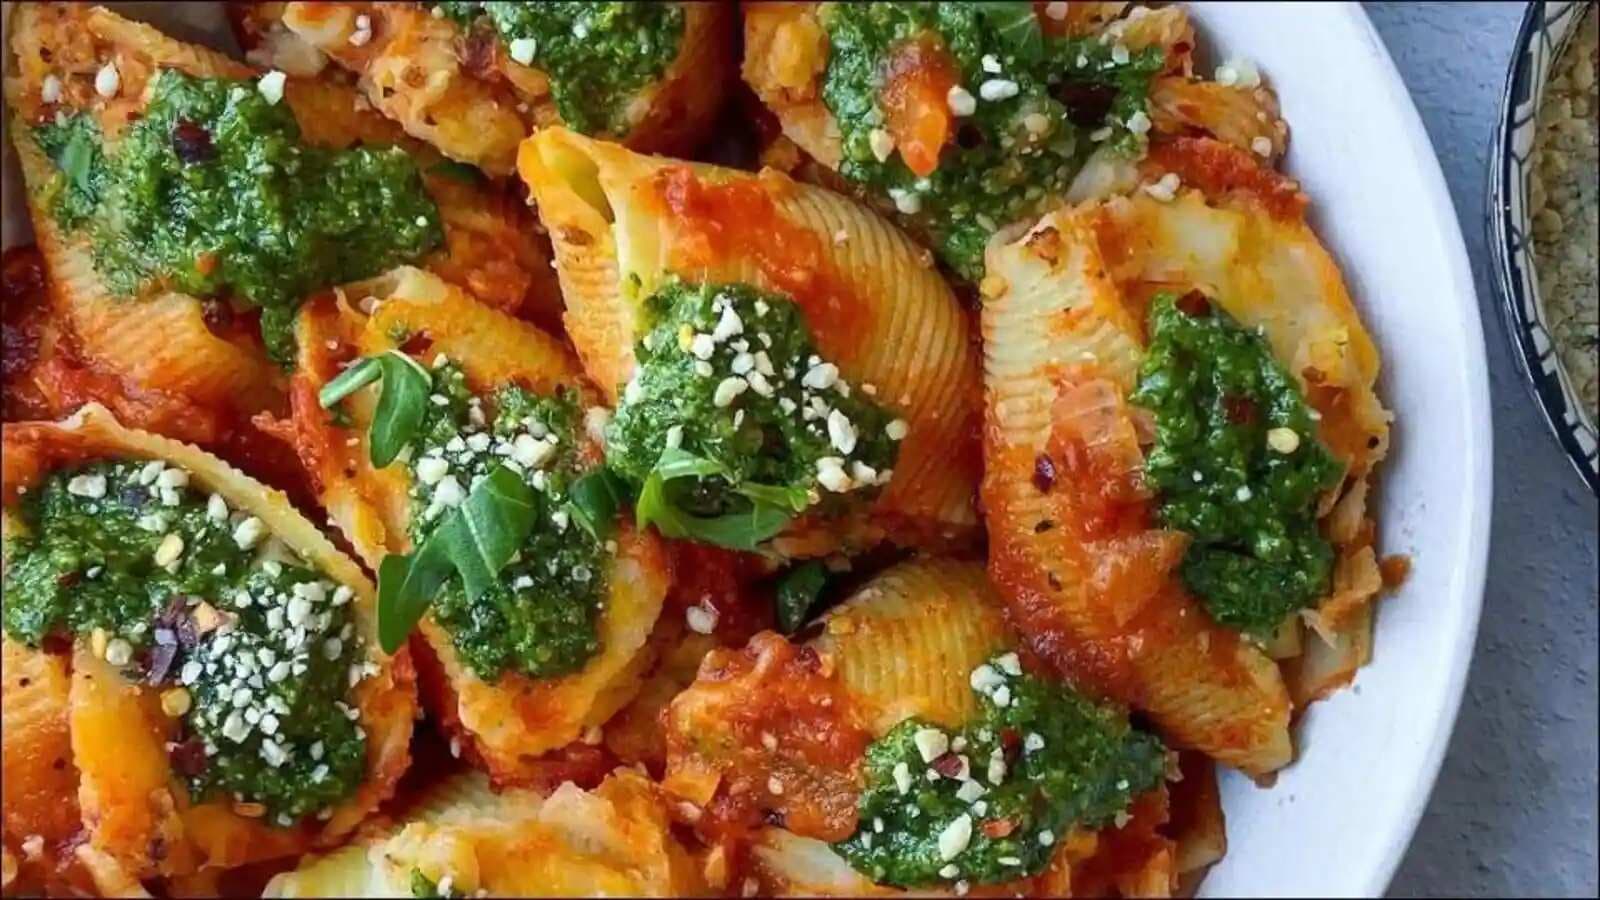 Recipe: These Irish/Italian vegan stuffed shells will leave you drooling